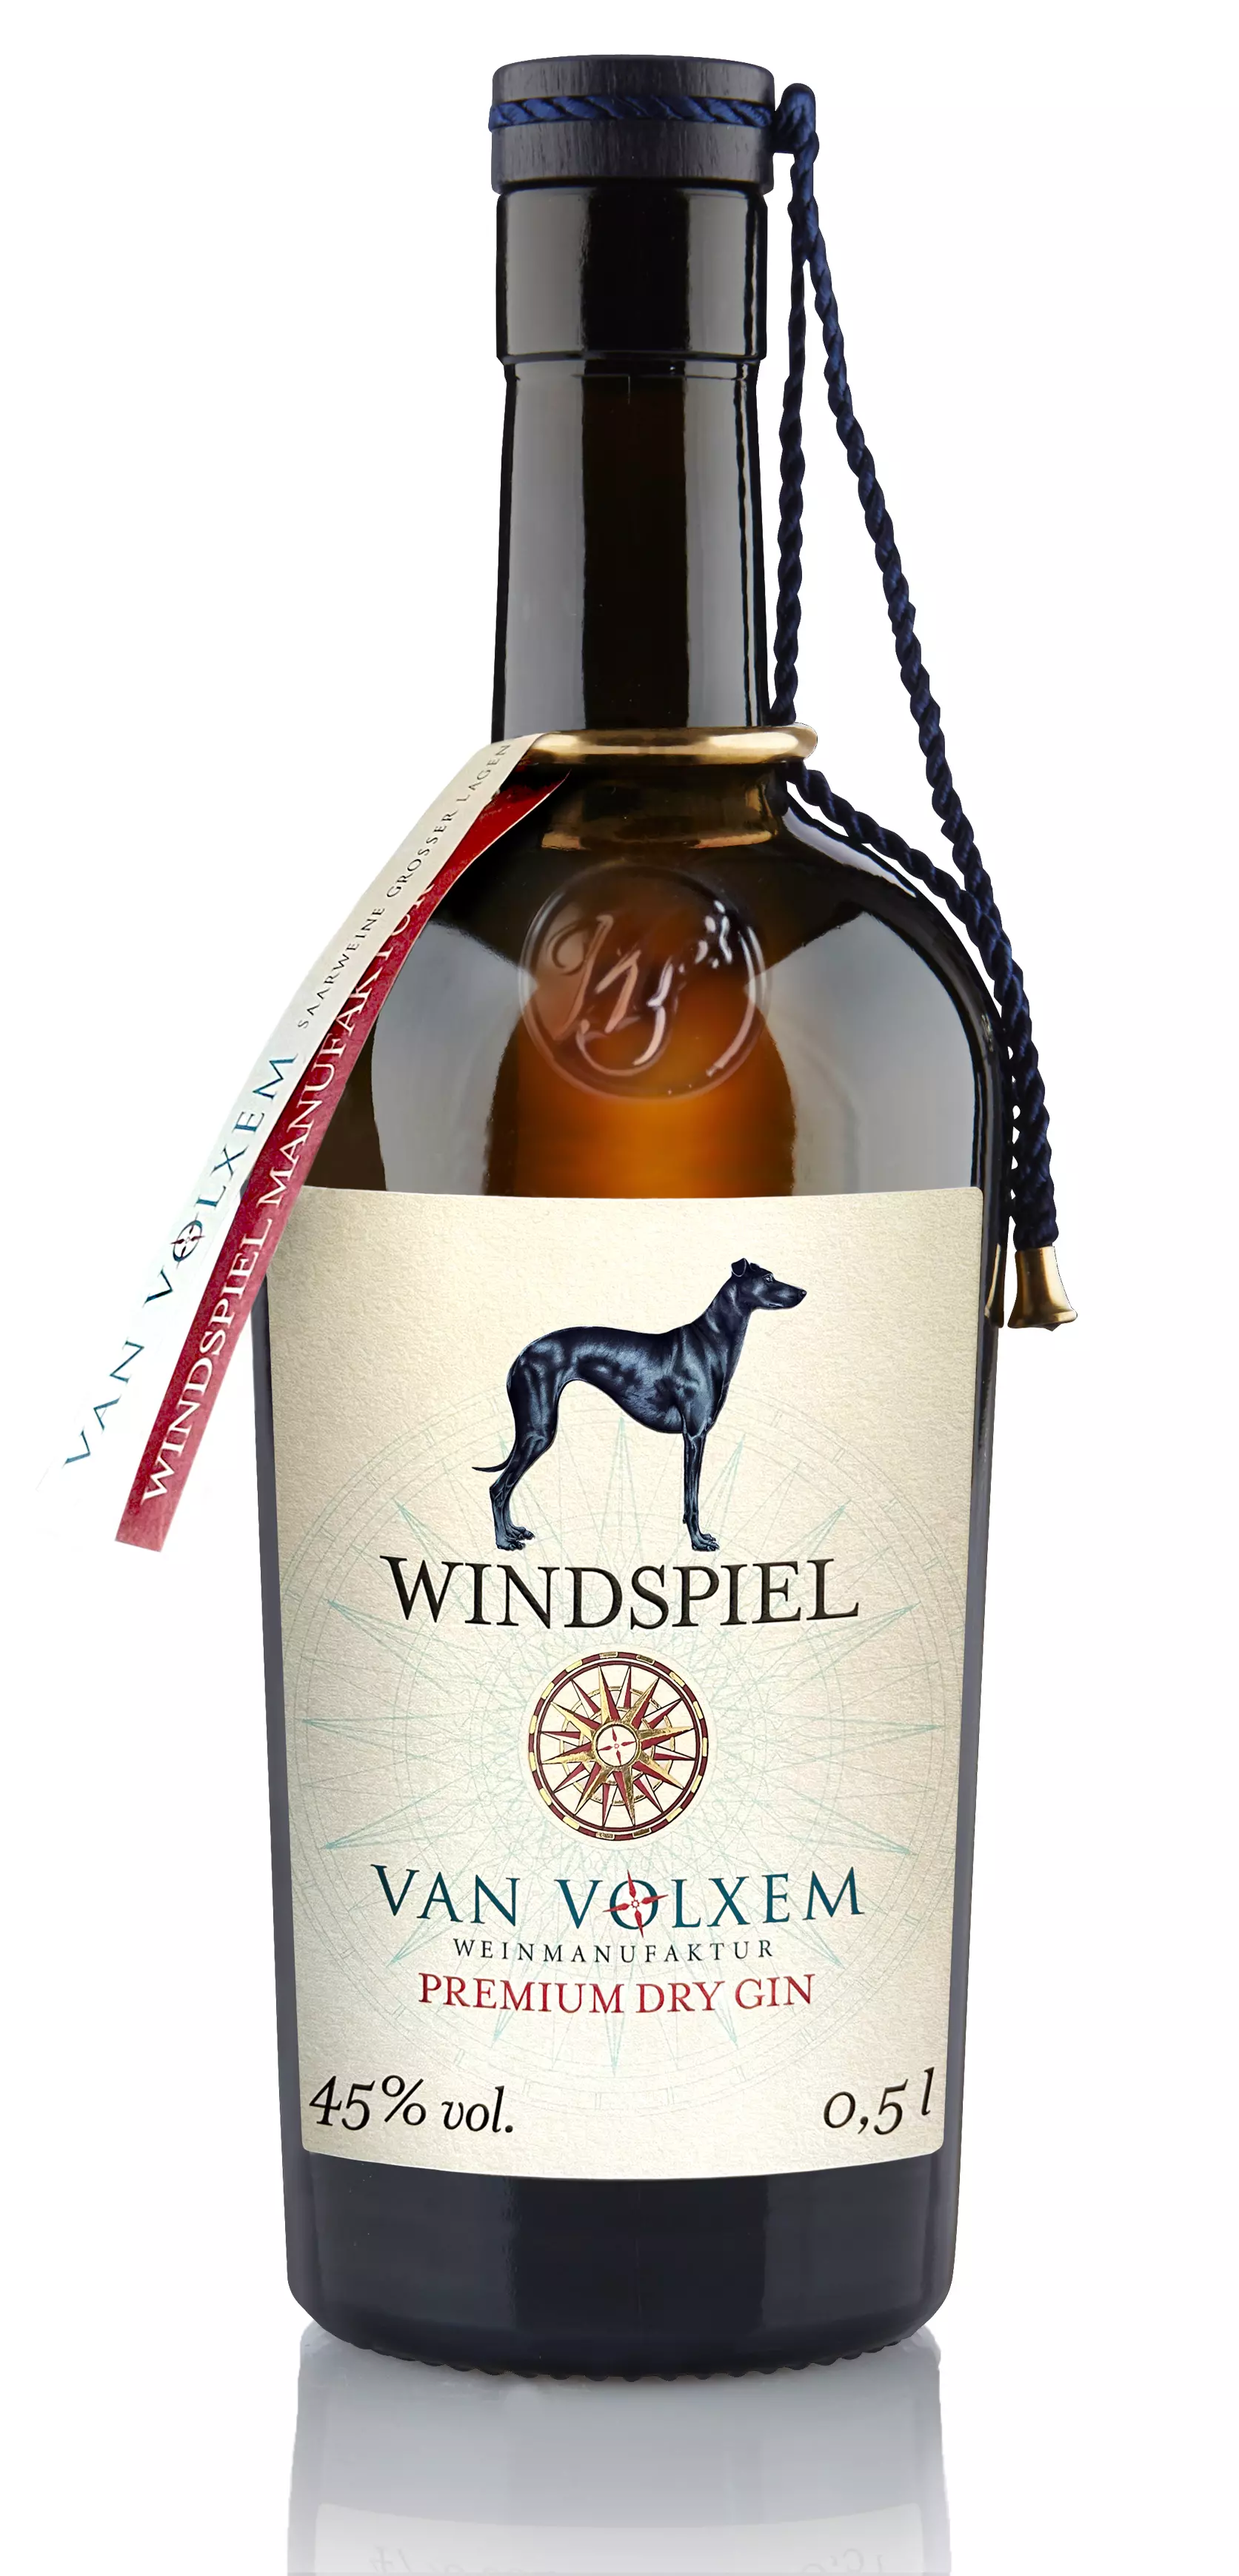 Windspiel Premium Dry Gin Van Volxem 45% vol. 0,5l